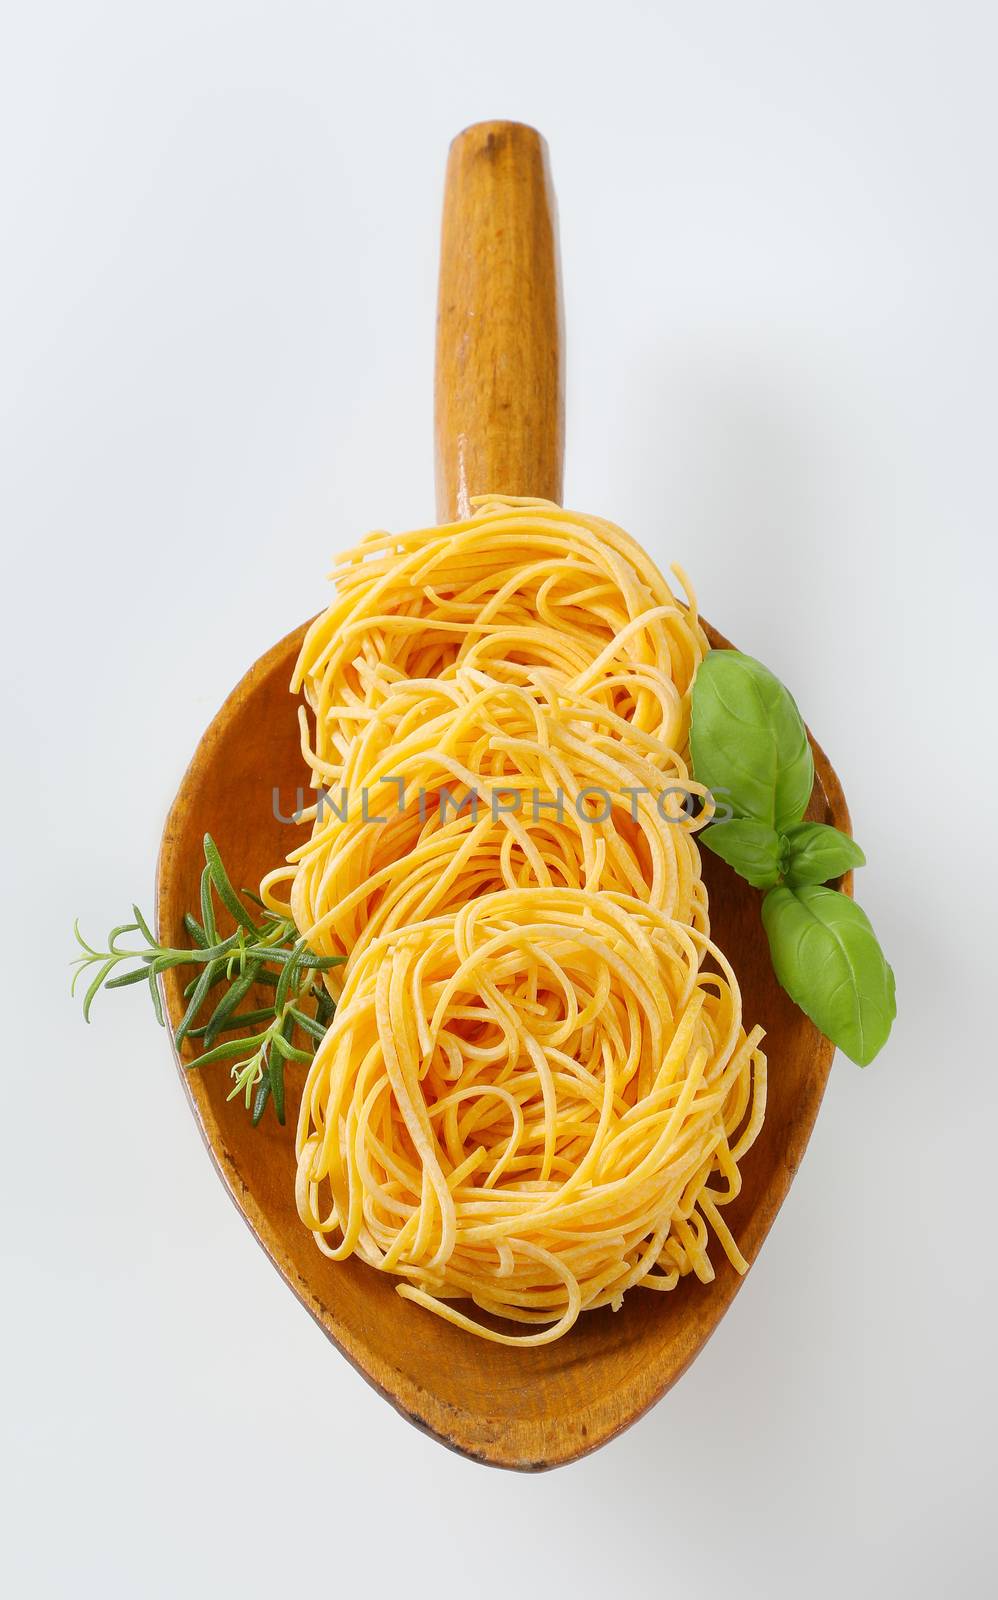 bundles of spaghetti pasta by Digifoodstock